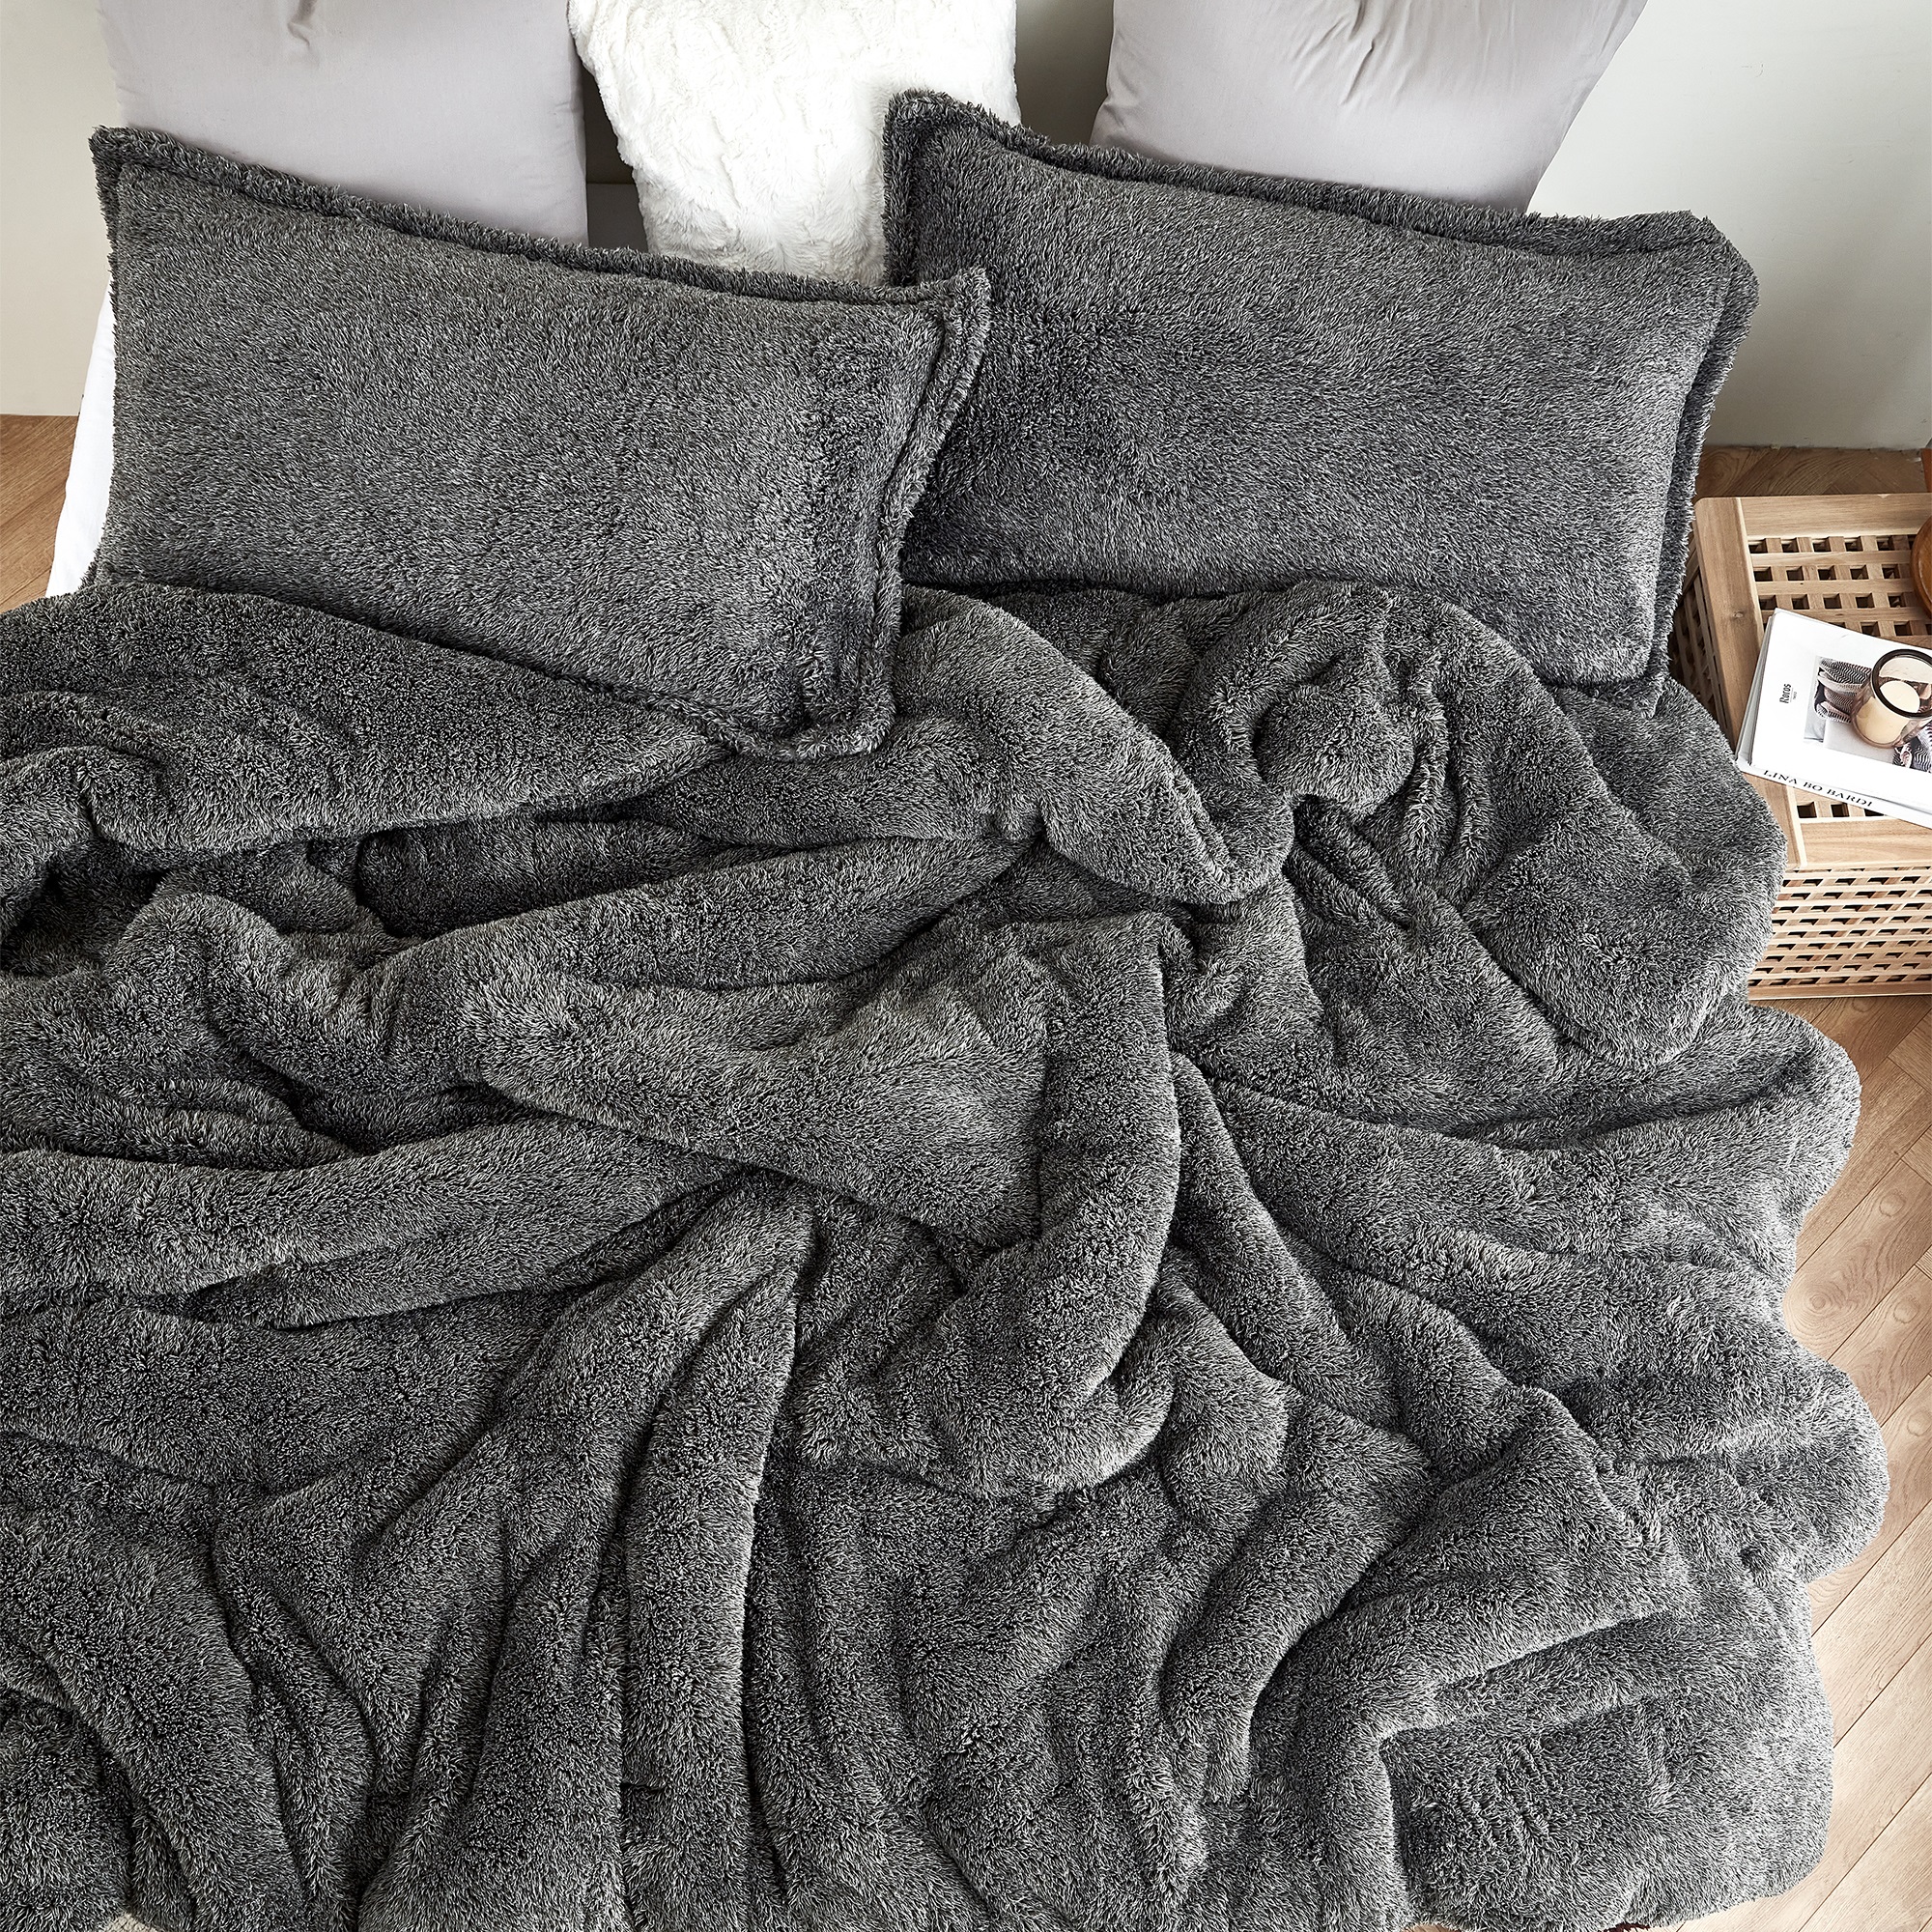 Coma Inducer Oversized Comforter - The Original Plush - Frosted Polar Marsh